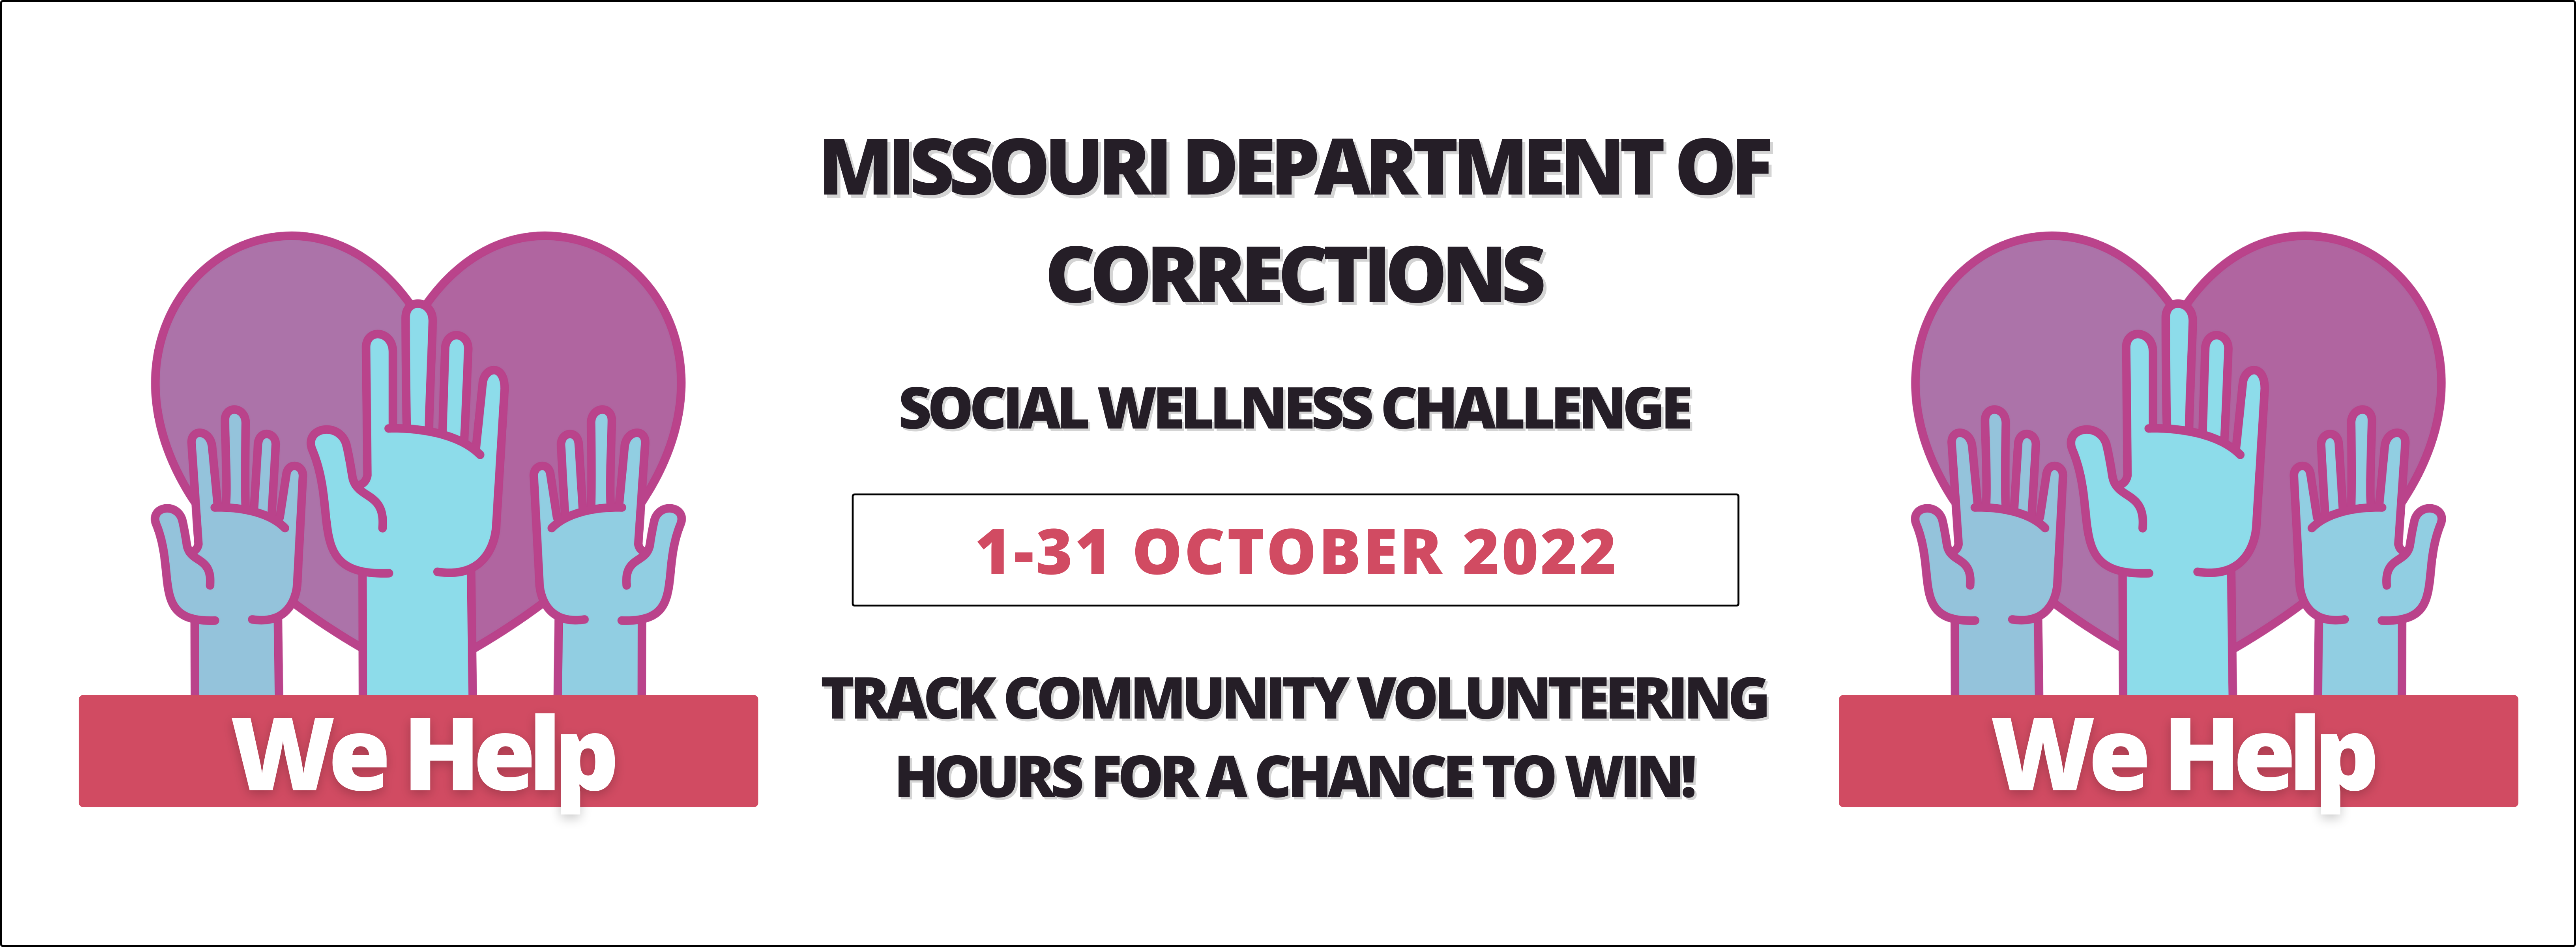 We Help social wellness challenge slider